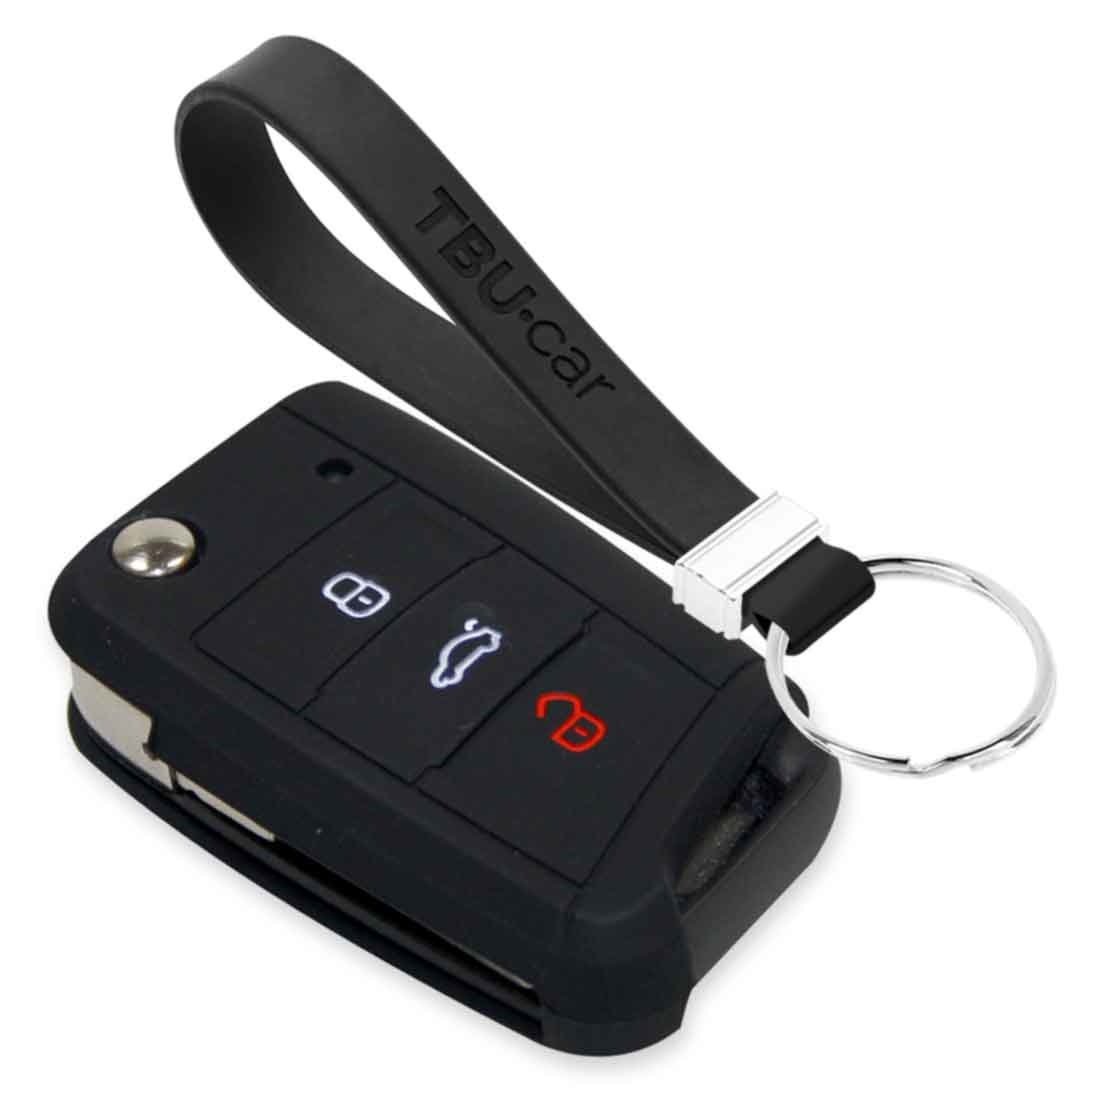 TBU car TBU car Sleutel cover compatibel met Skoda - Silicone sleutelhoesje - beschermhoesje autosleutel - Zwart